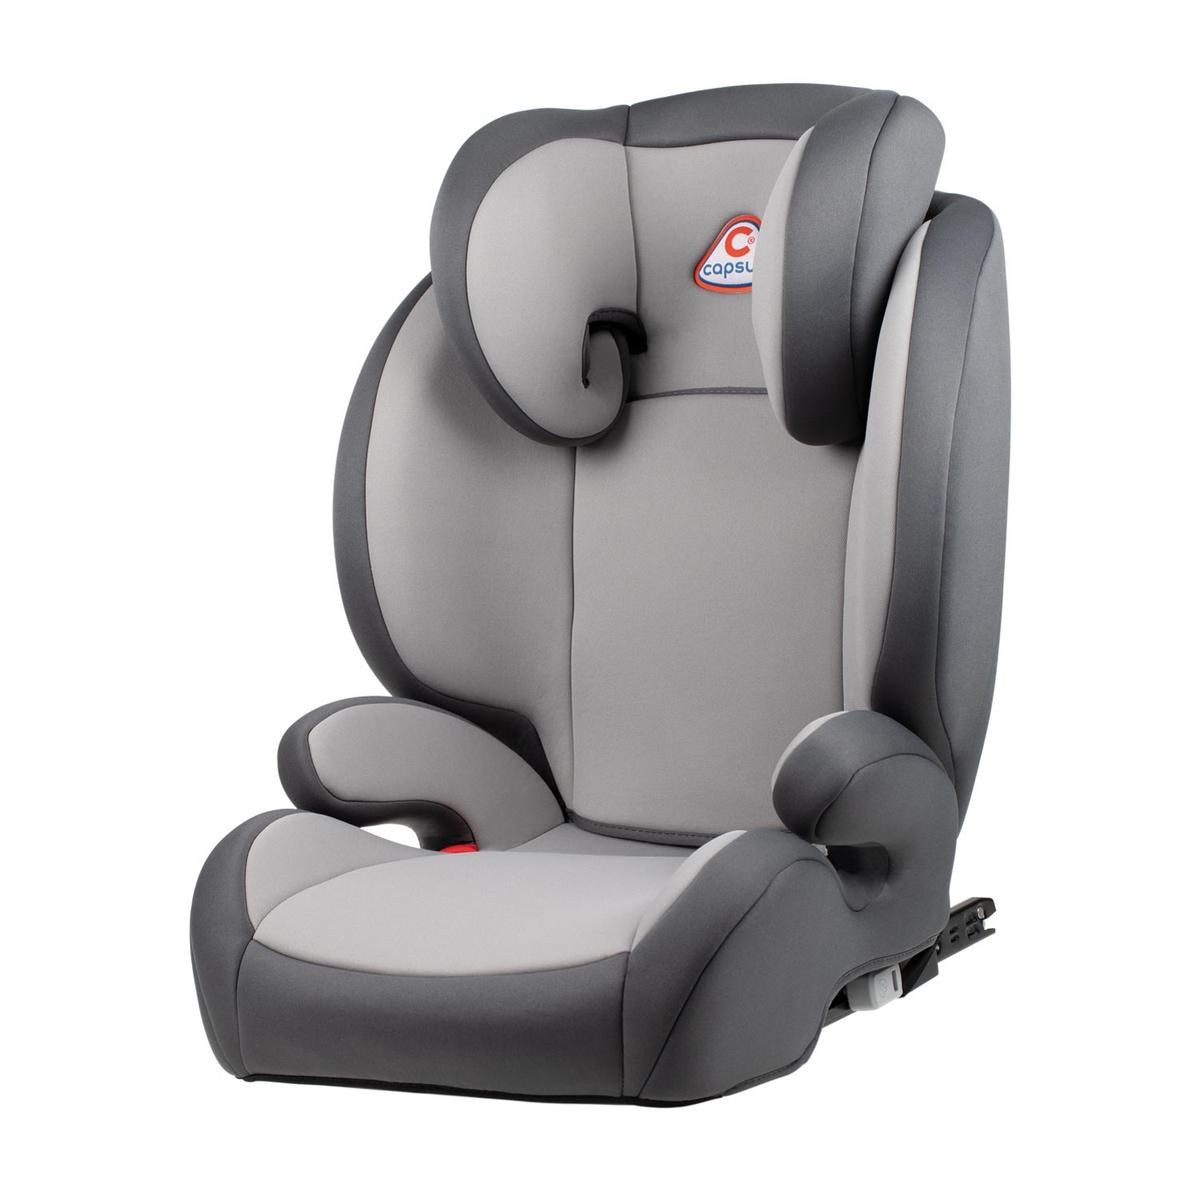 Children's car seat 772120 capsula 772120 original quality